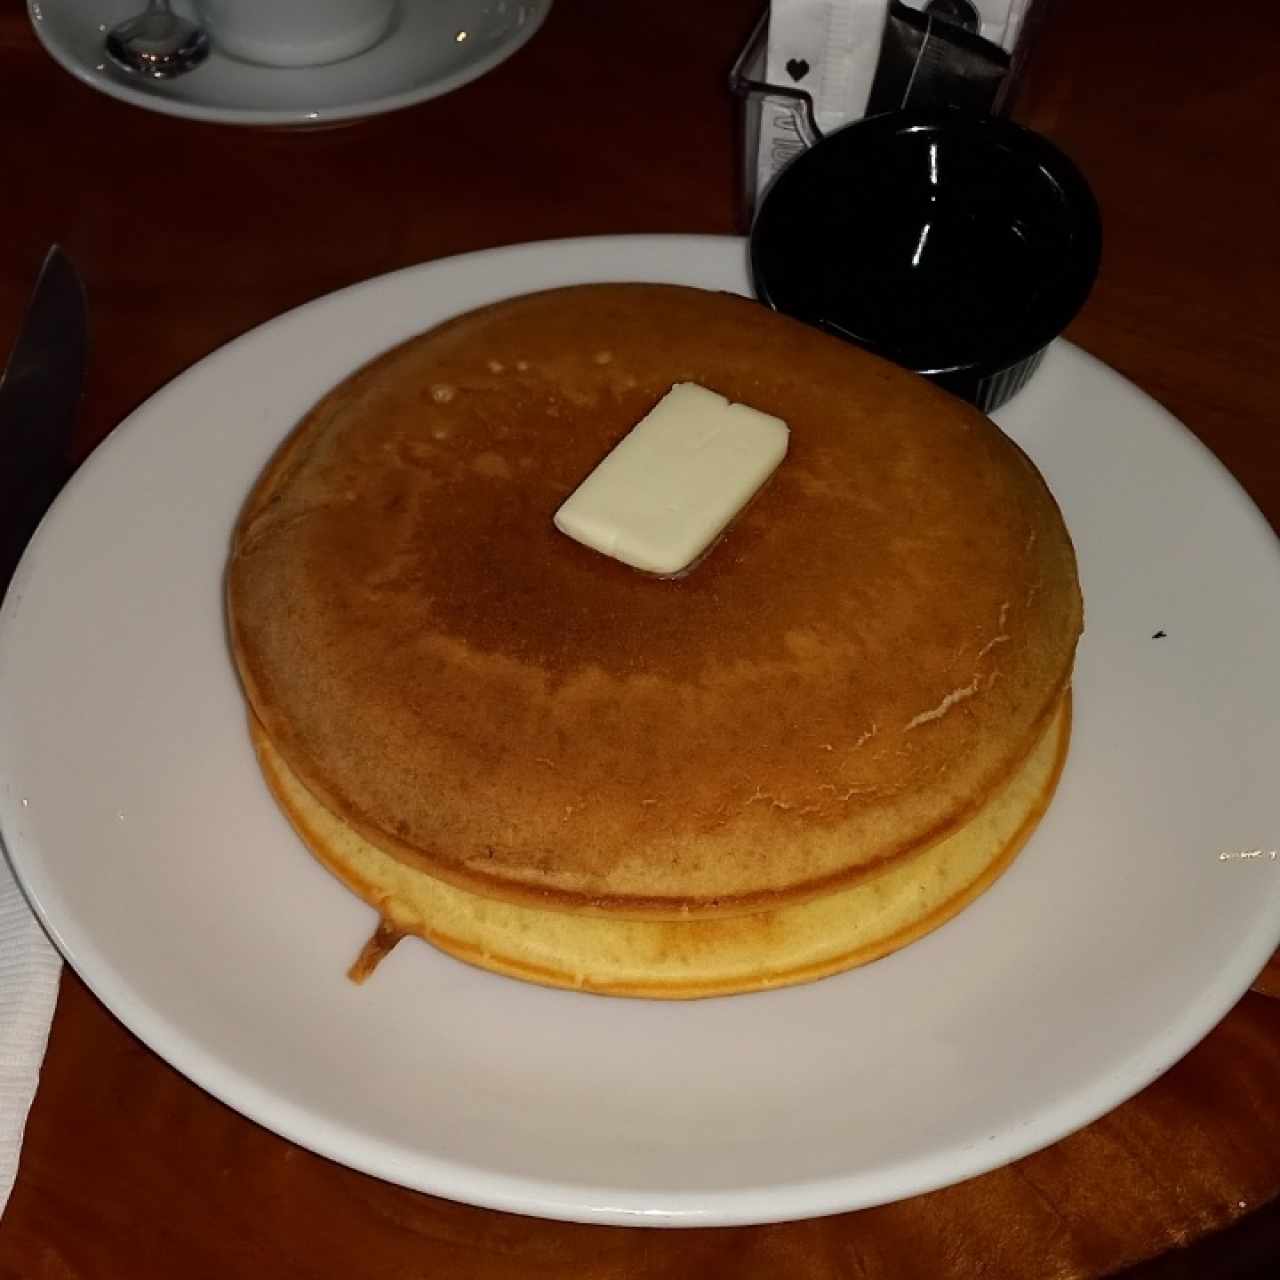 Desayuno - Pancakes Plain